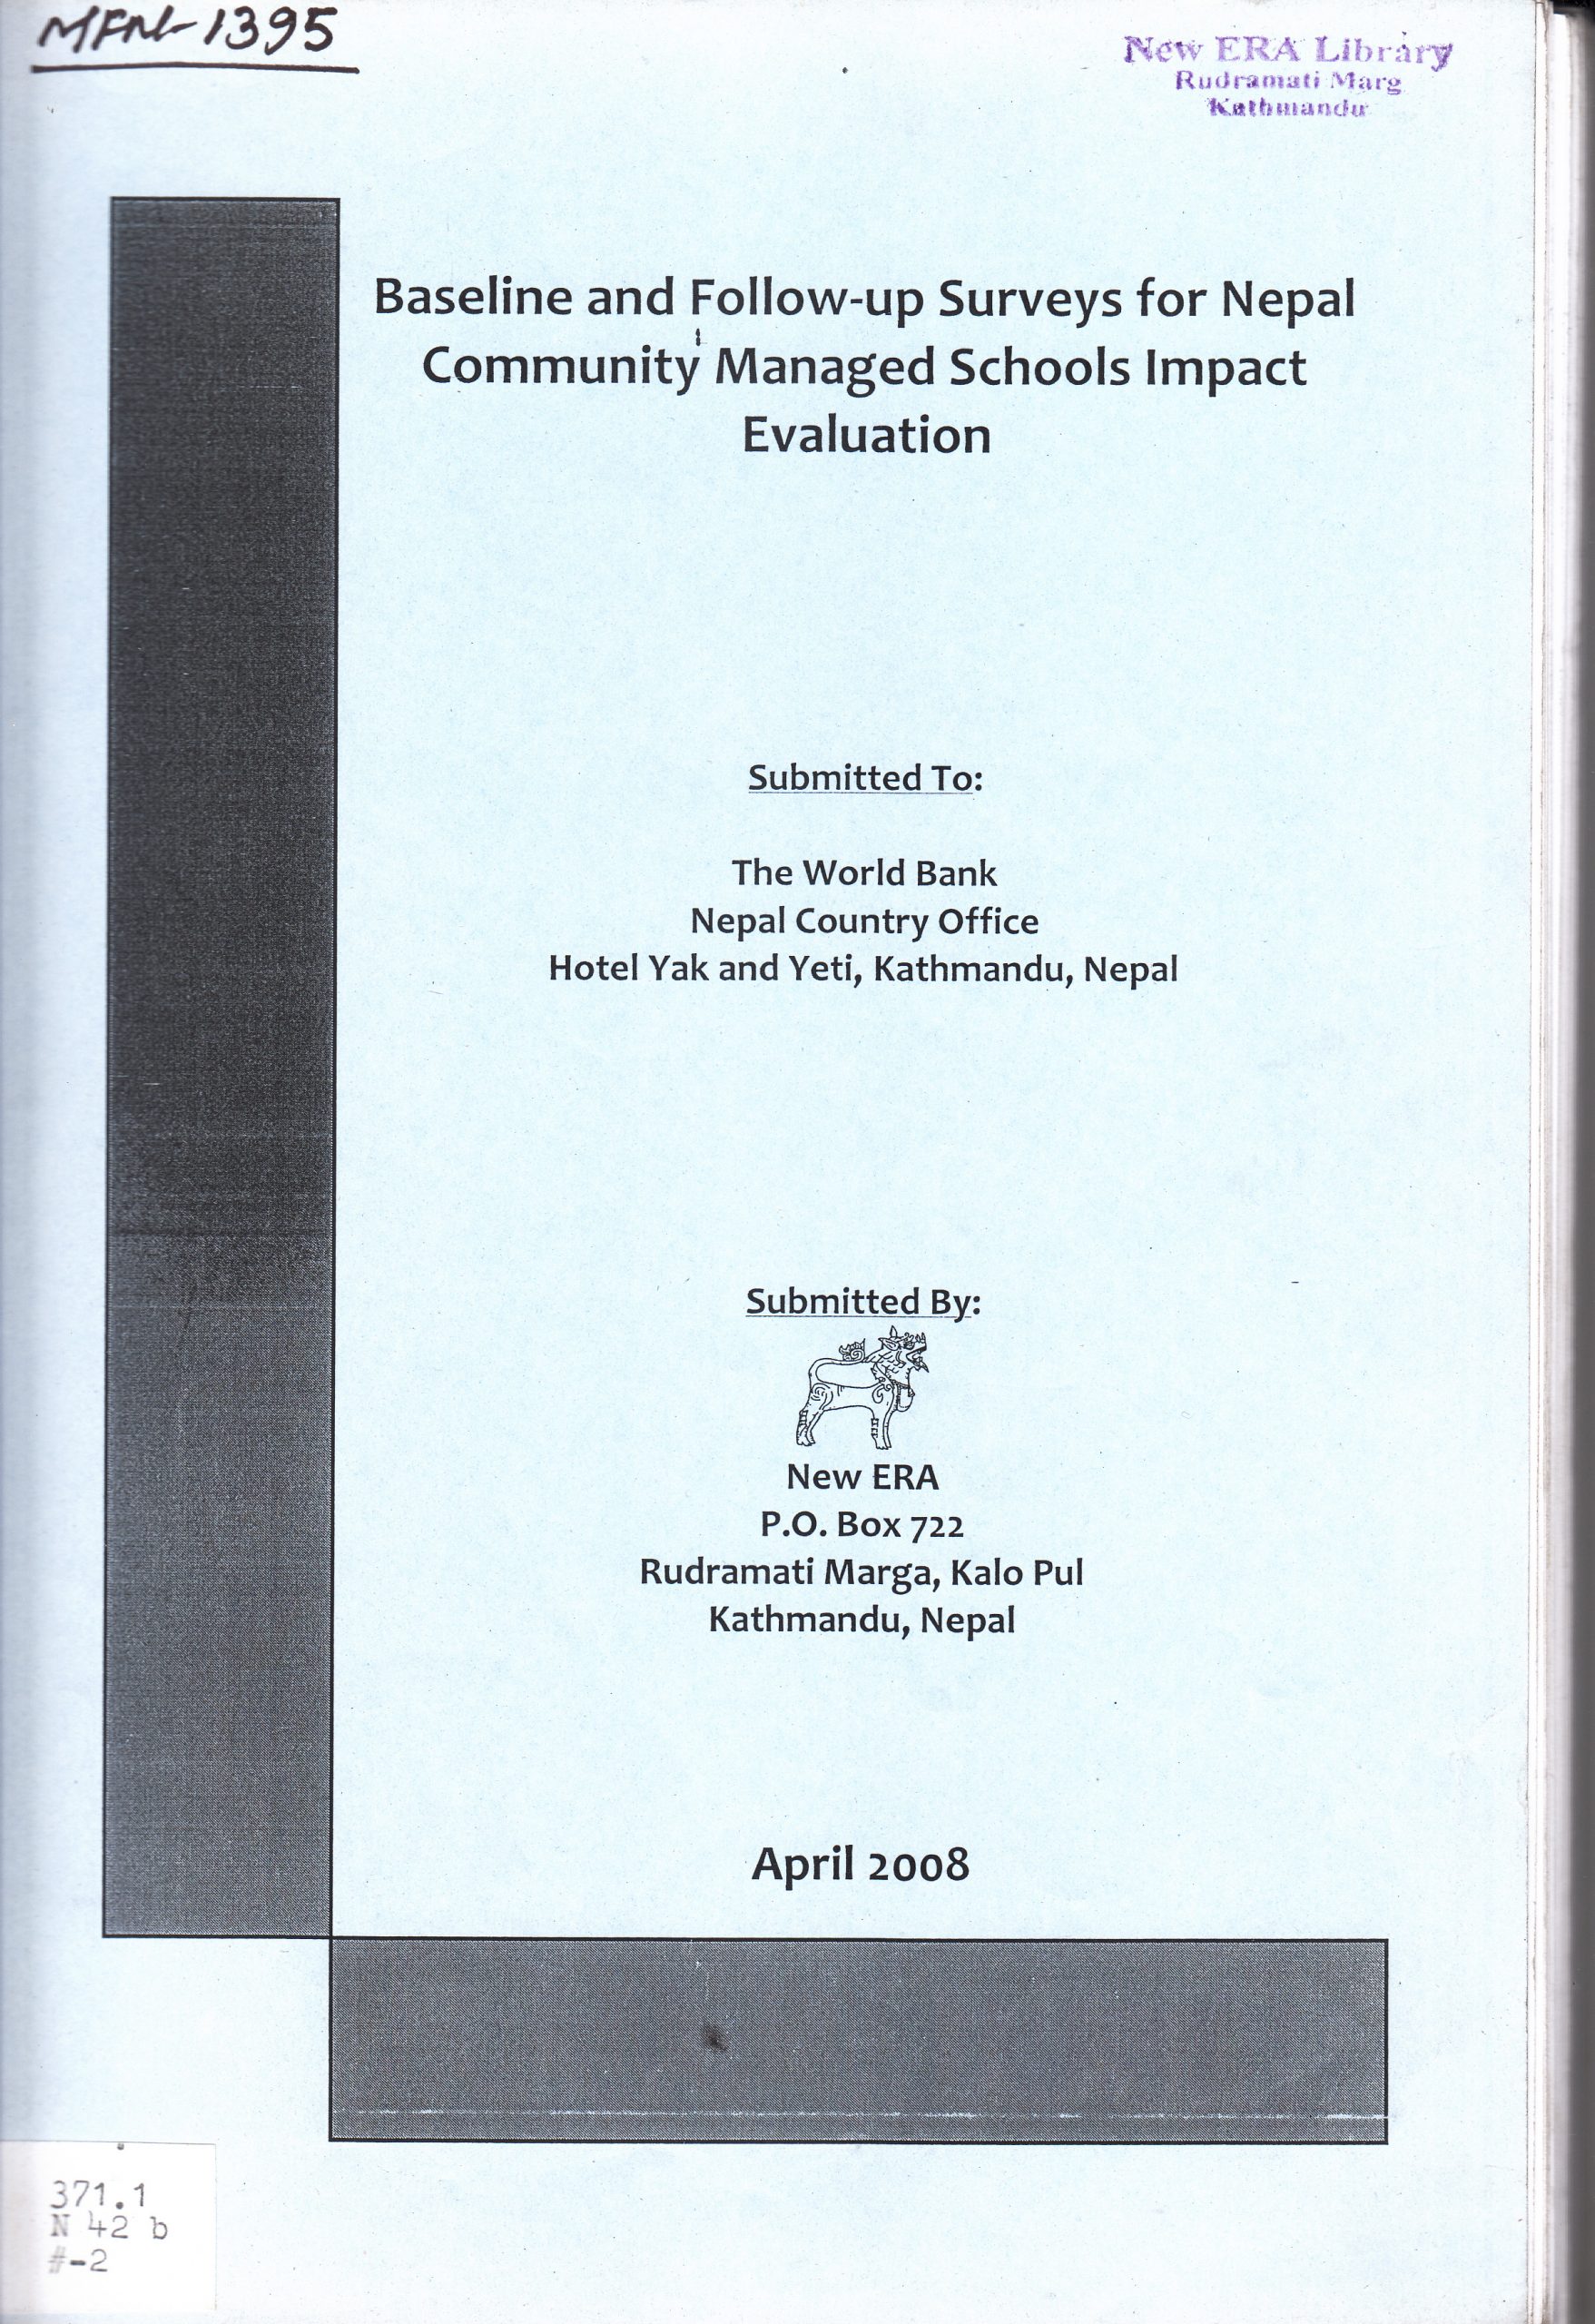 Baseline and Follow-up Surveys for Nepal Community Managed Schools Impact Evaluation